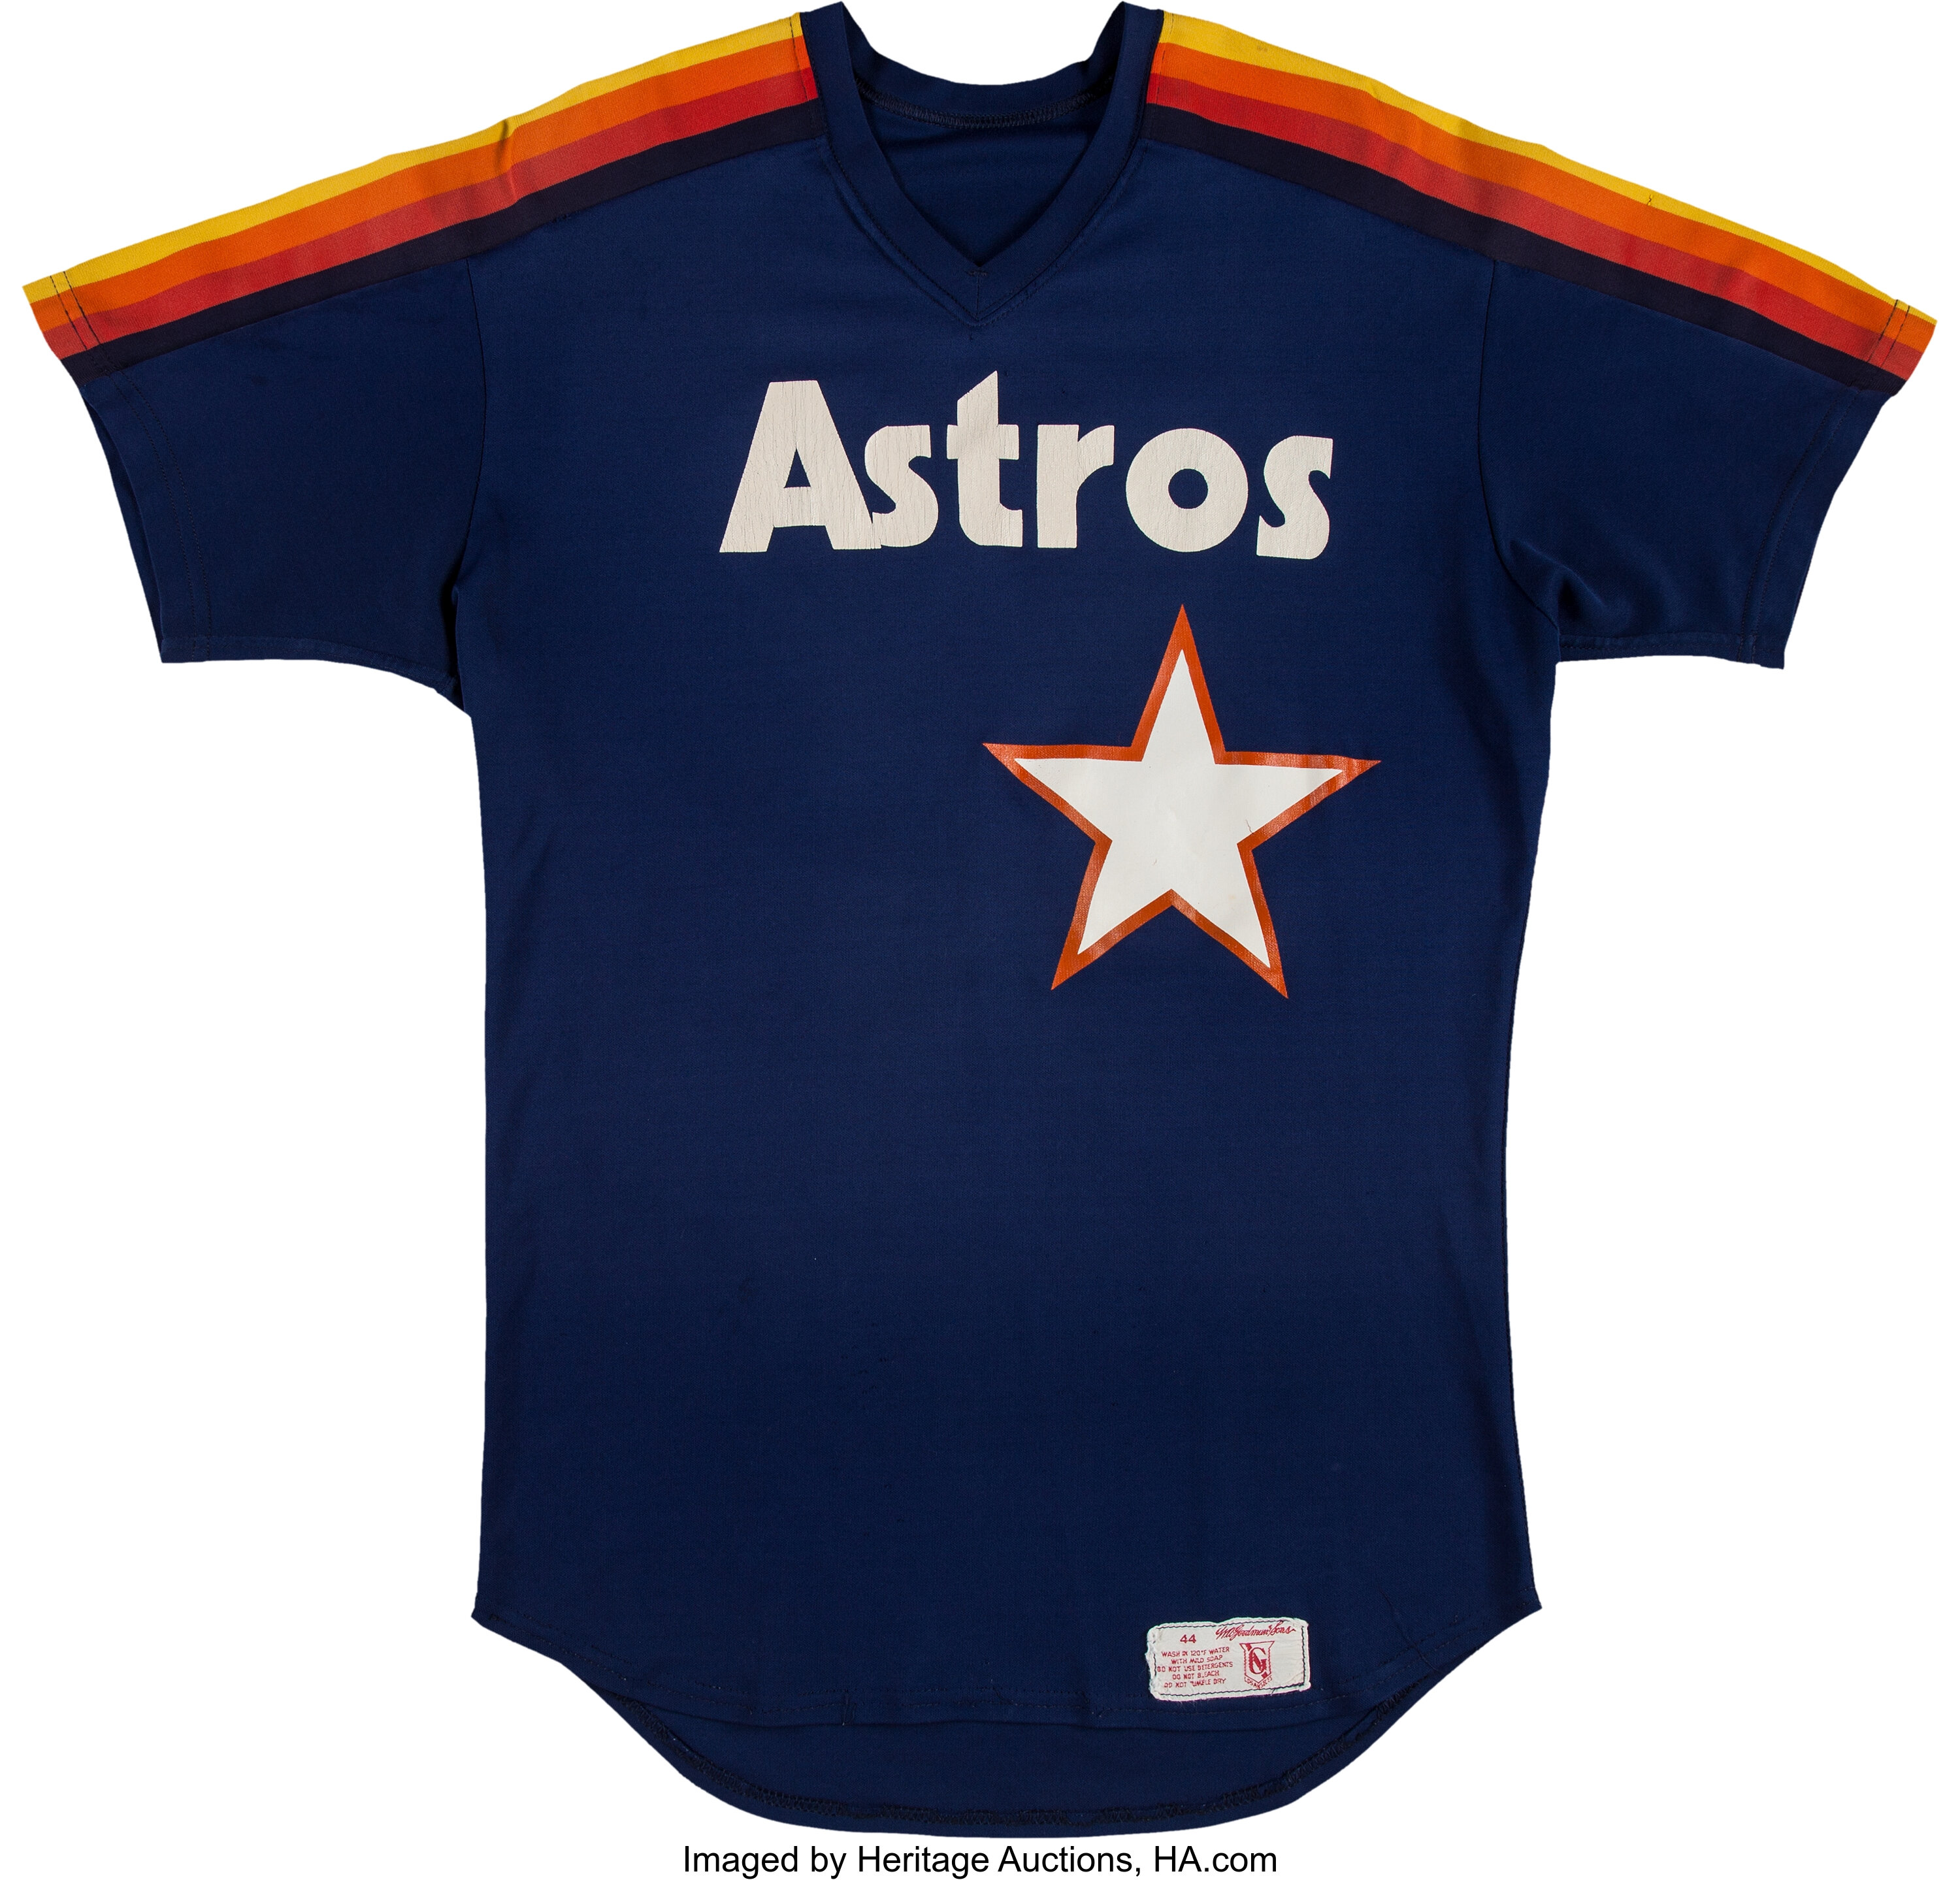 1980s astros uniform